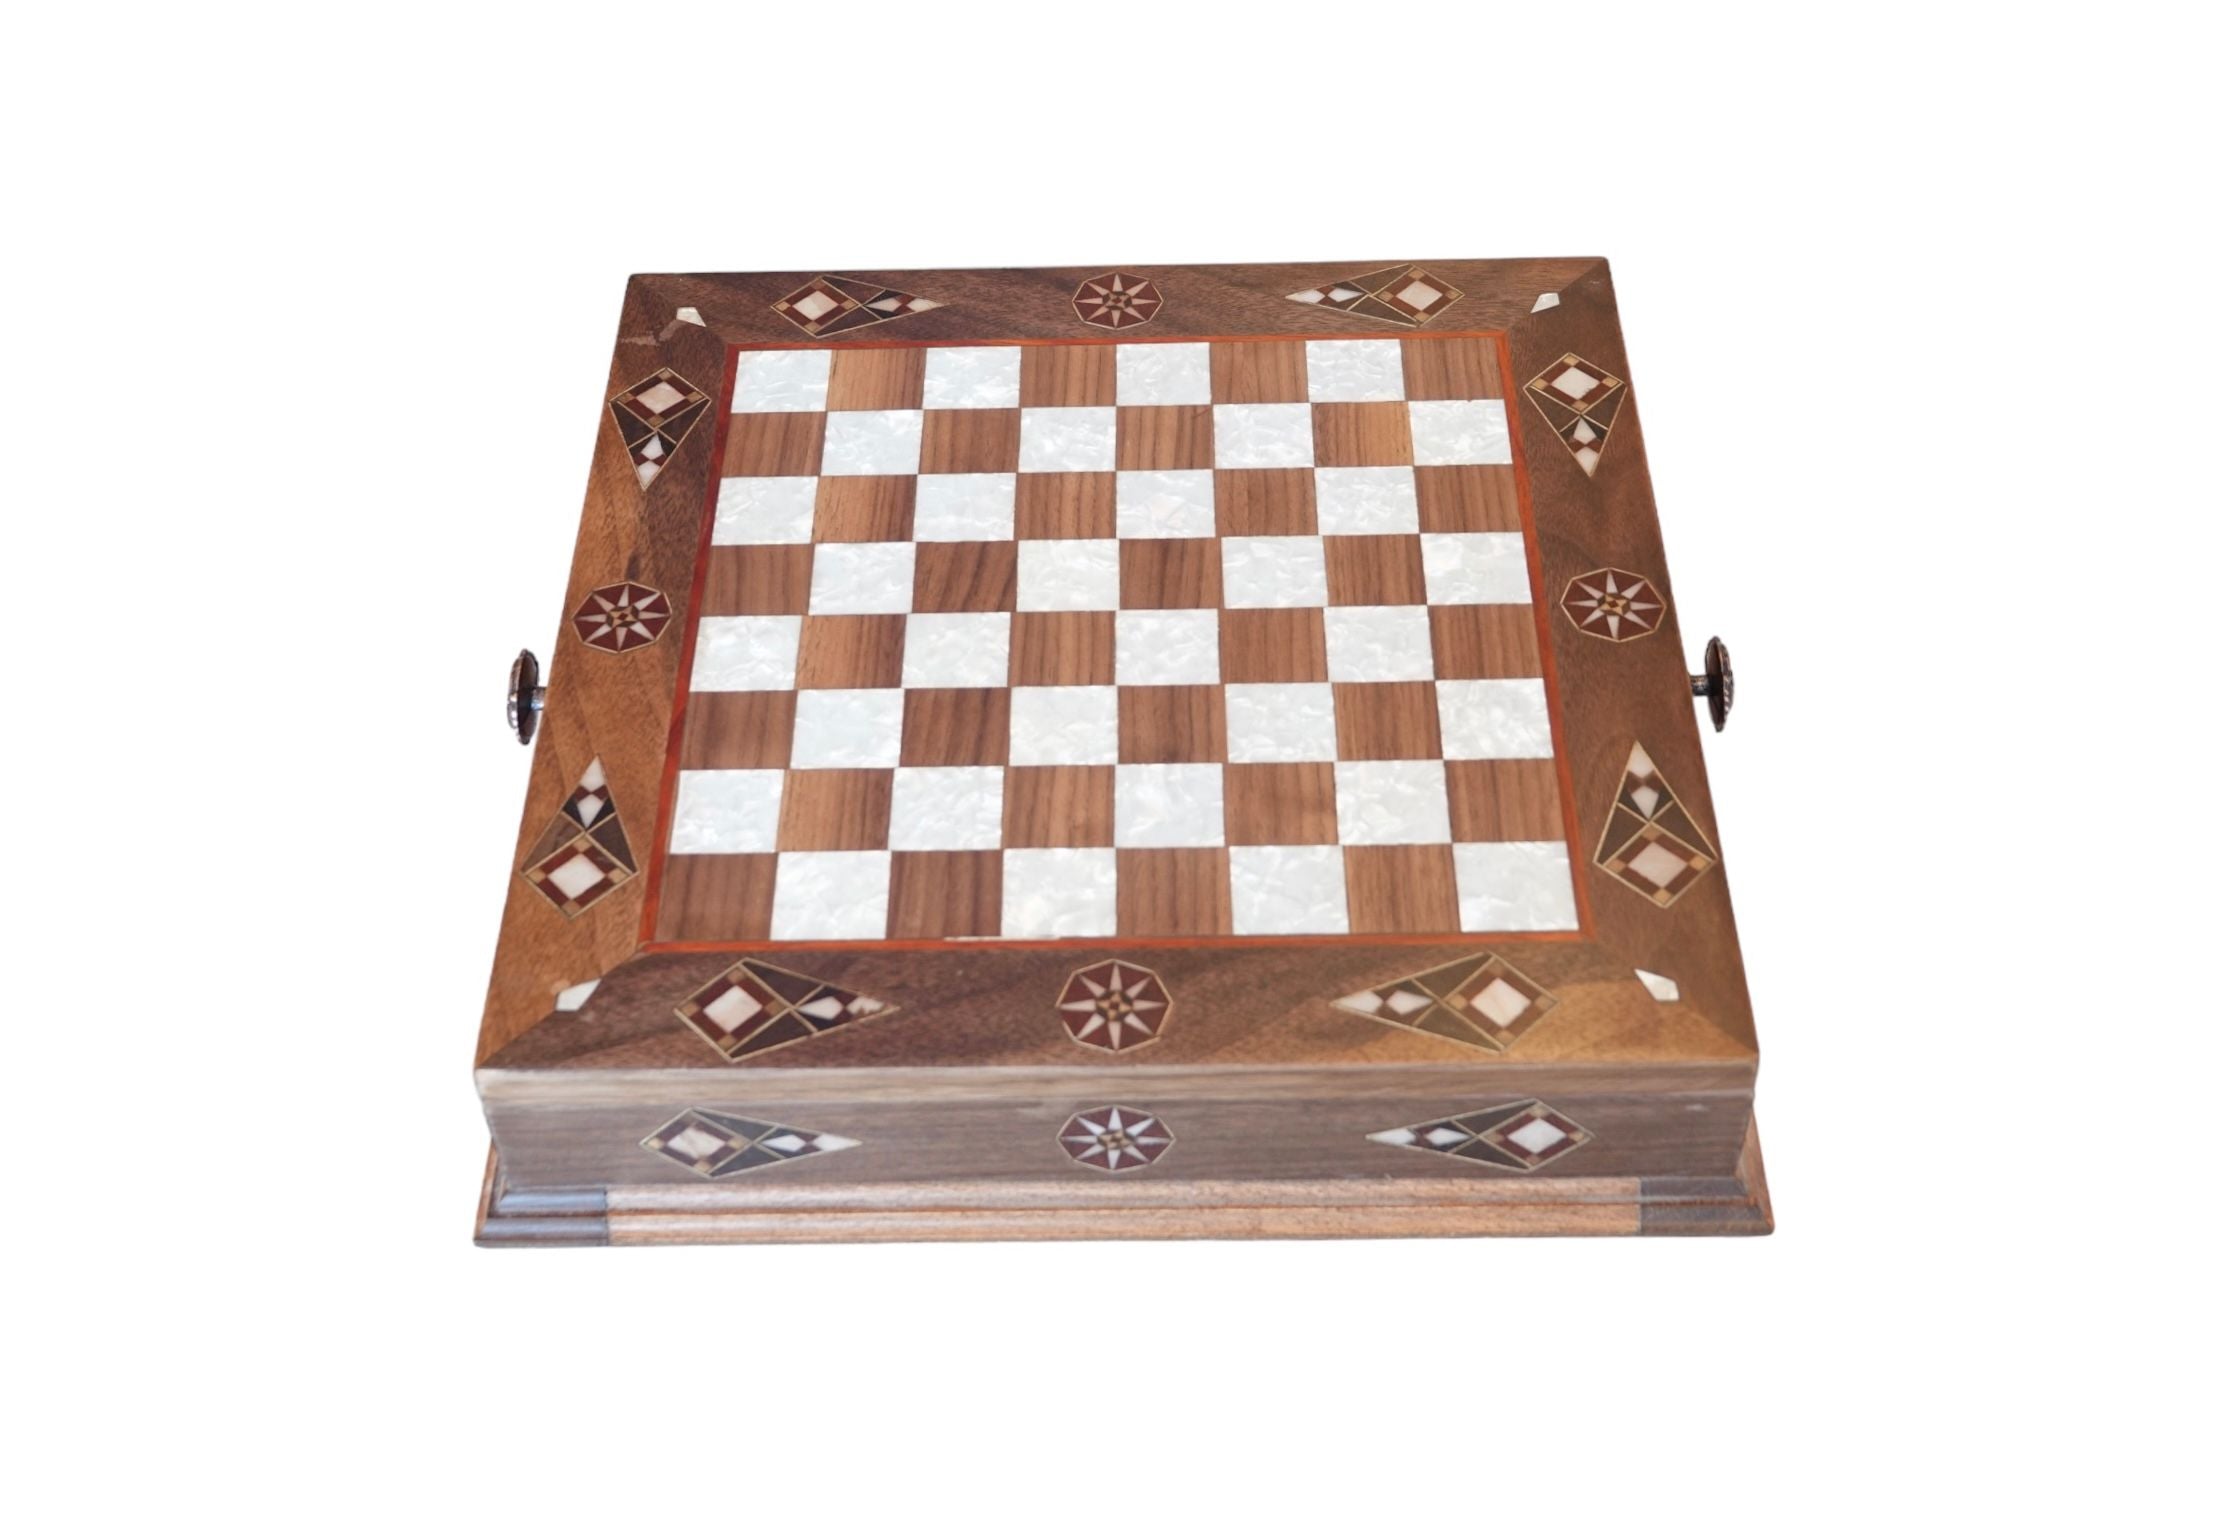 Square Box Chess Board With Draws - Small